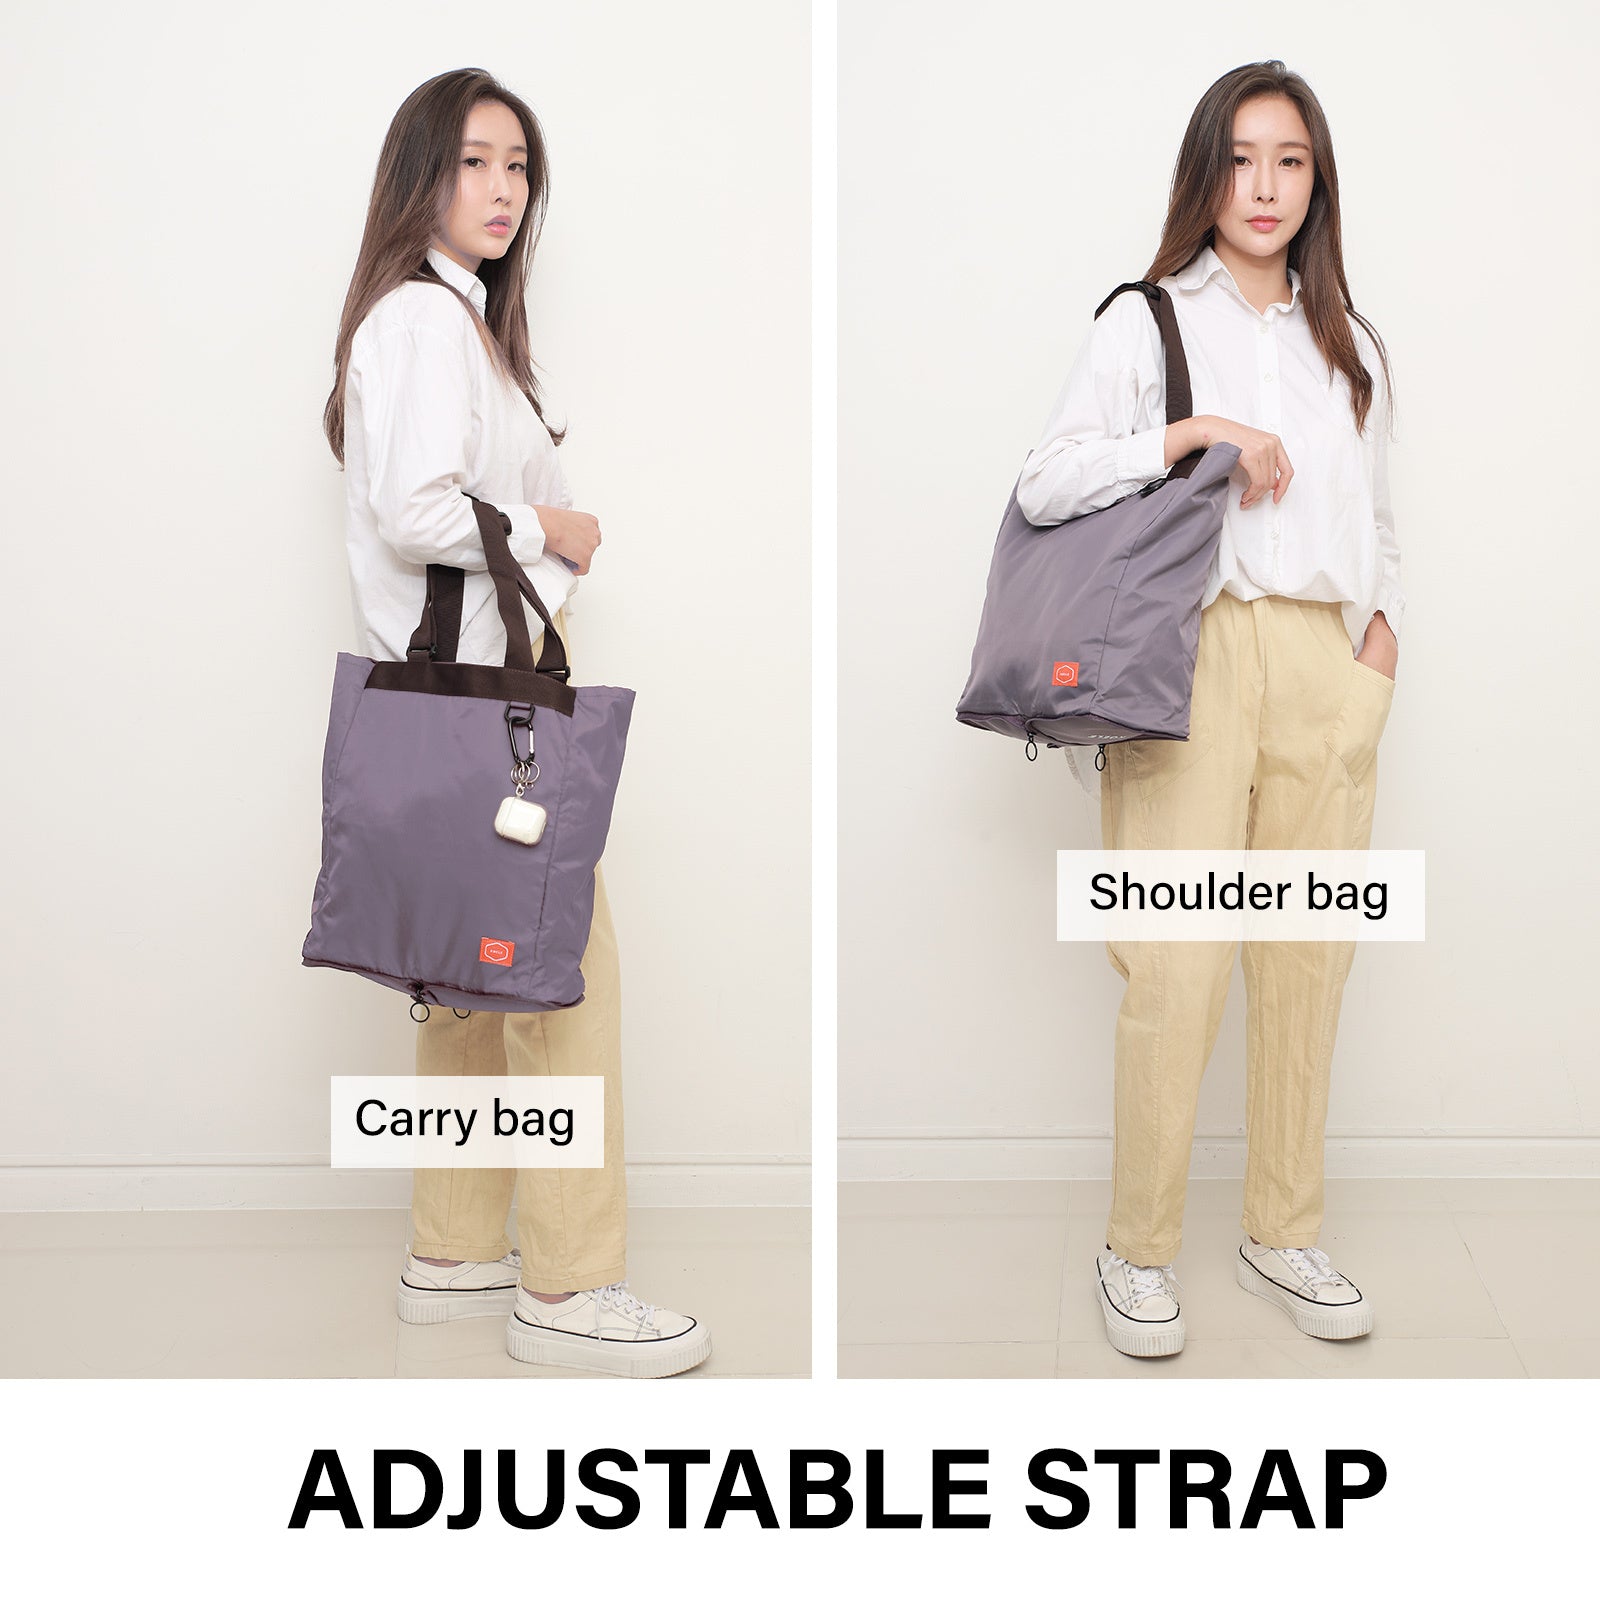 Shopper Bag Tote Bag Foldable Travel Laptop Grocery Nylon KO-SHOULDER PURPLE